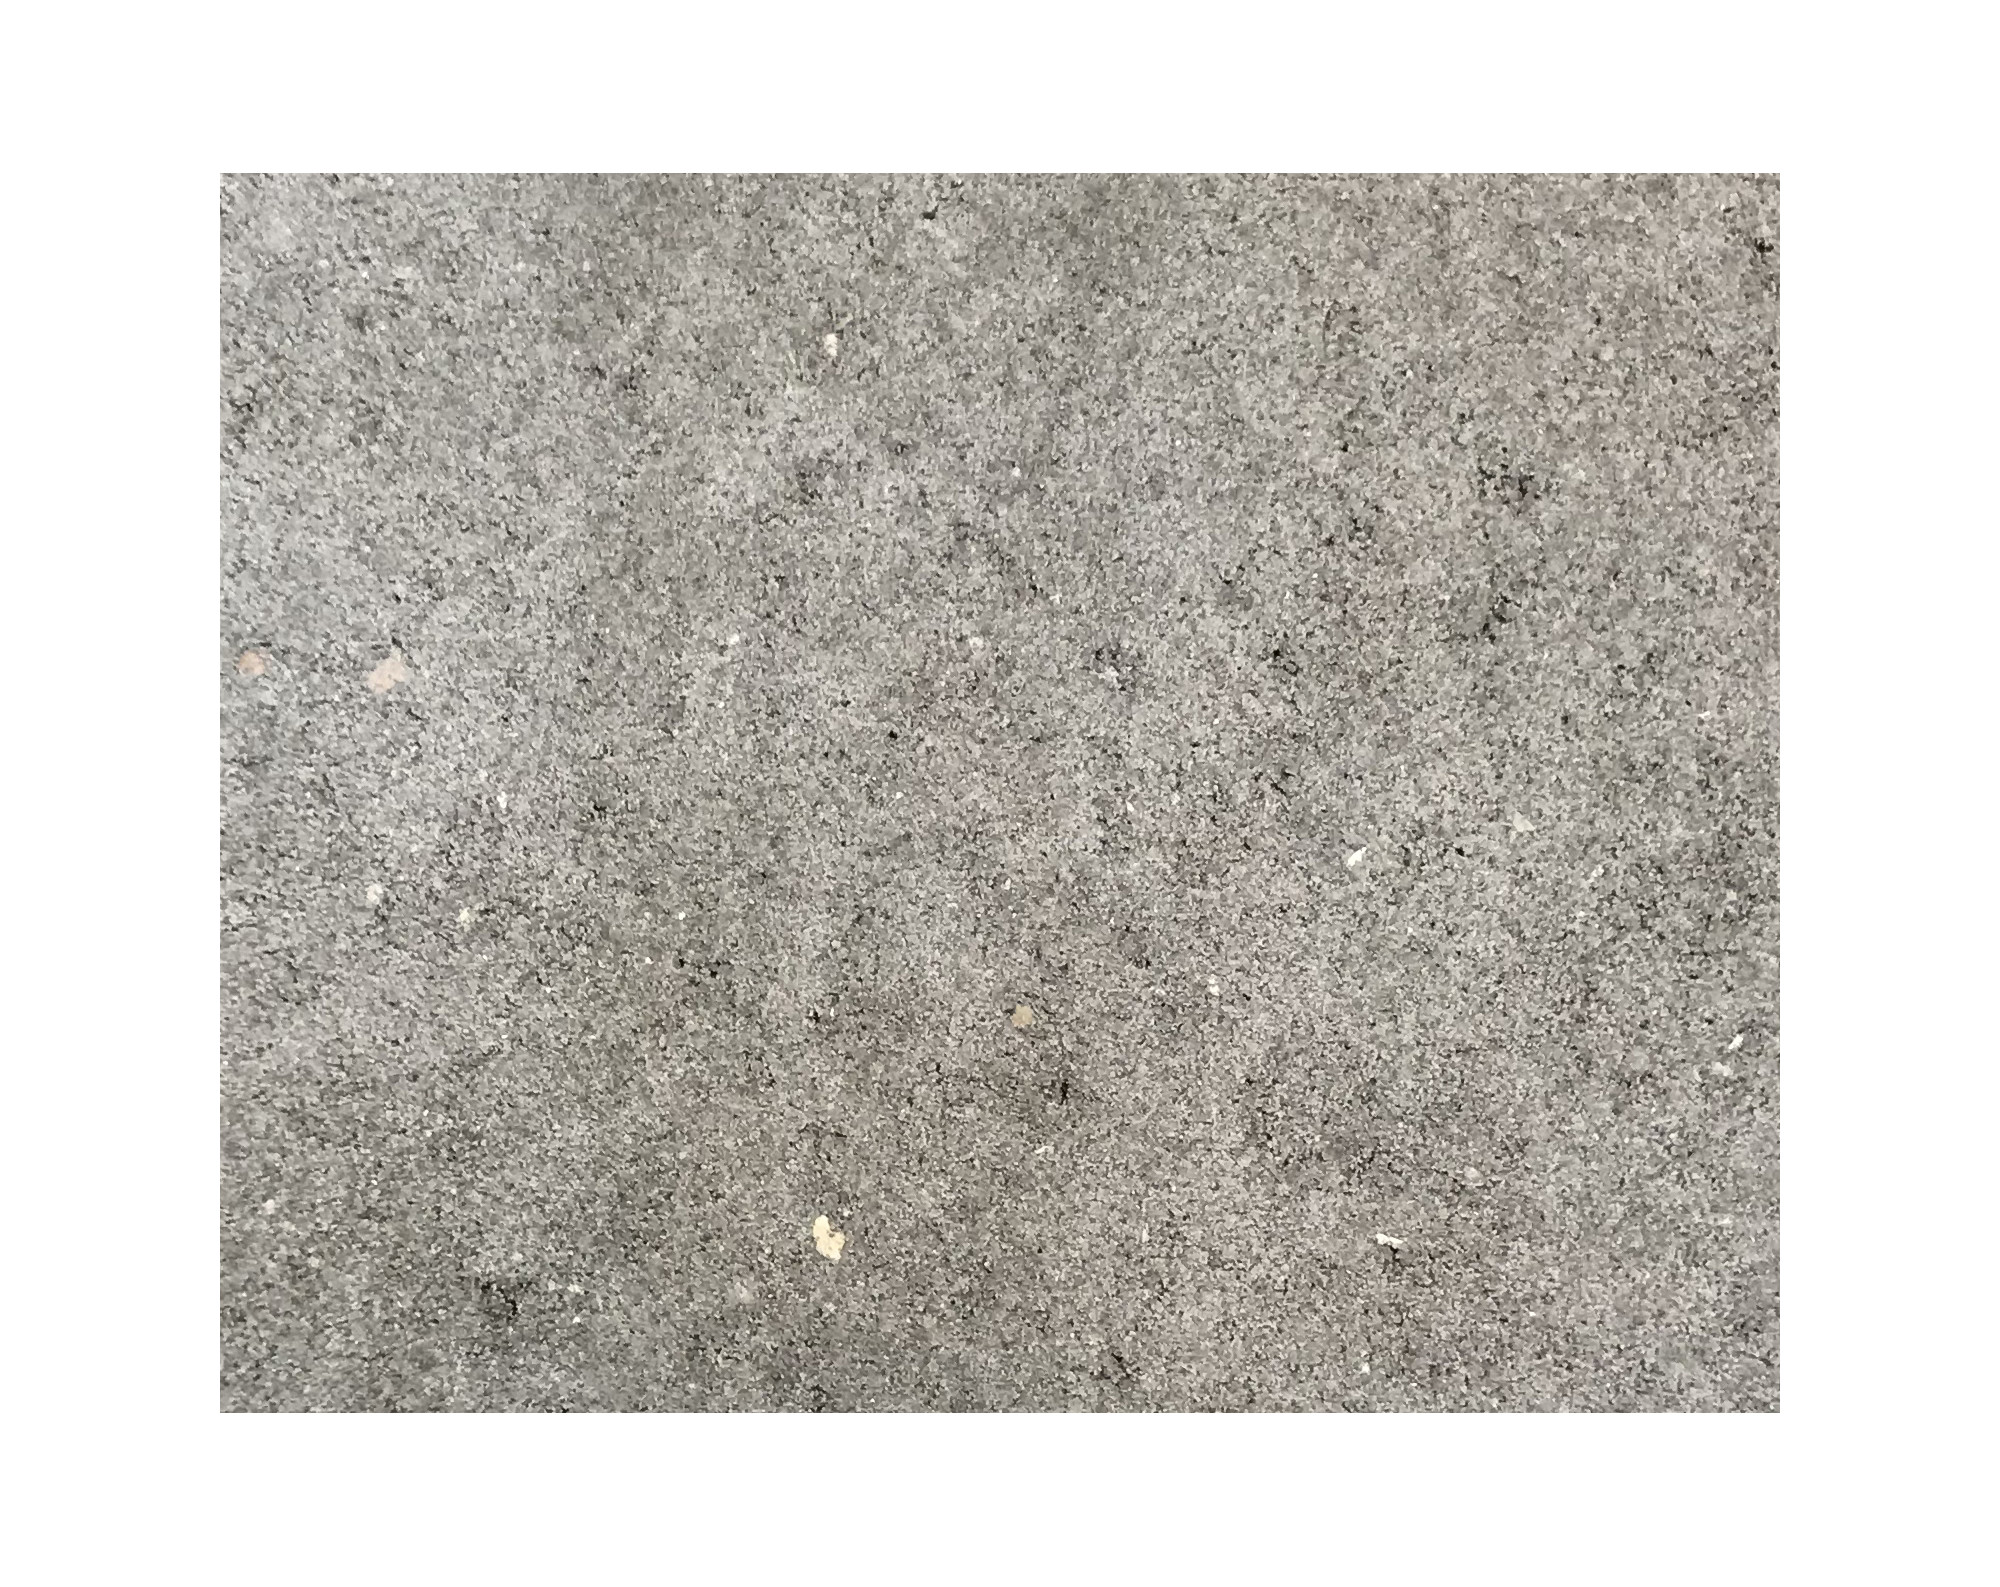 Harmo roc nevadaset, rustica-serie, ovaal d: 6,00mx12,60m, grijs, beton